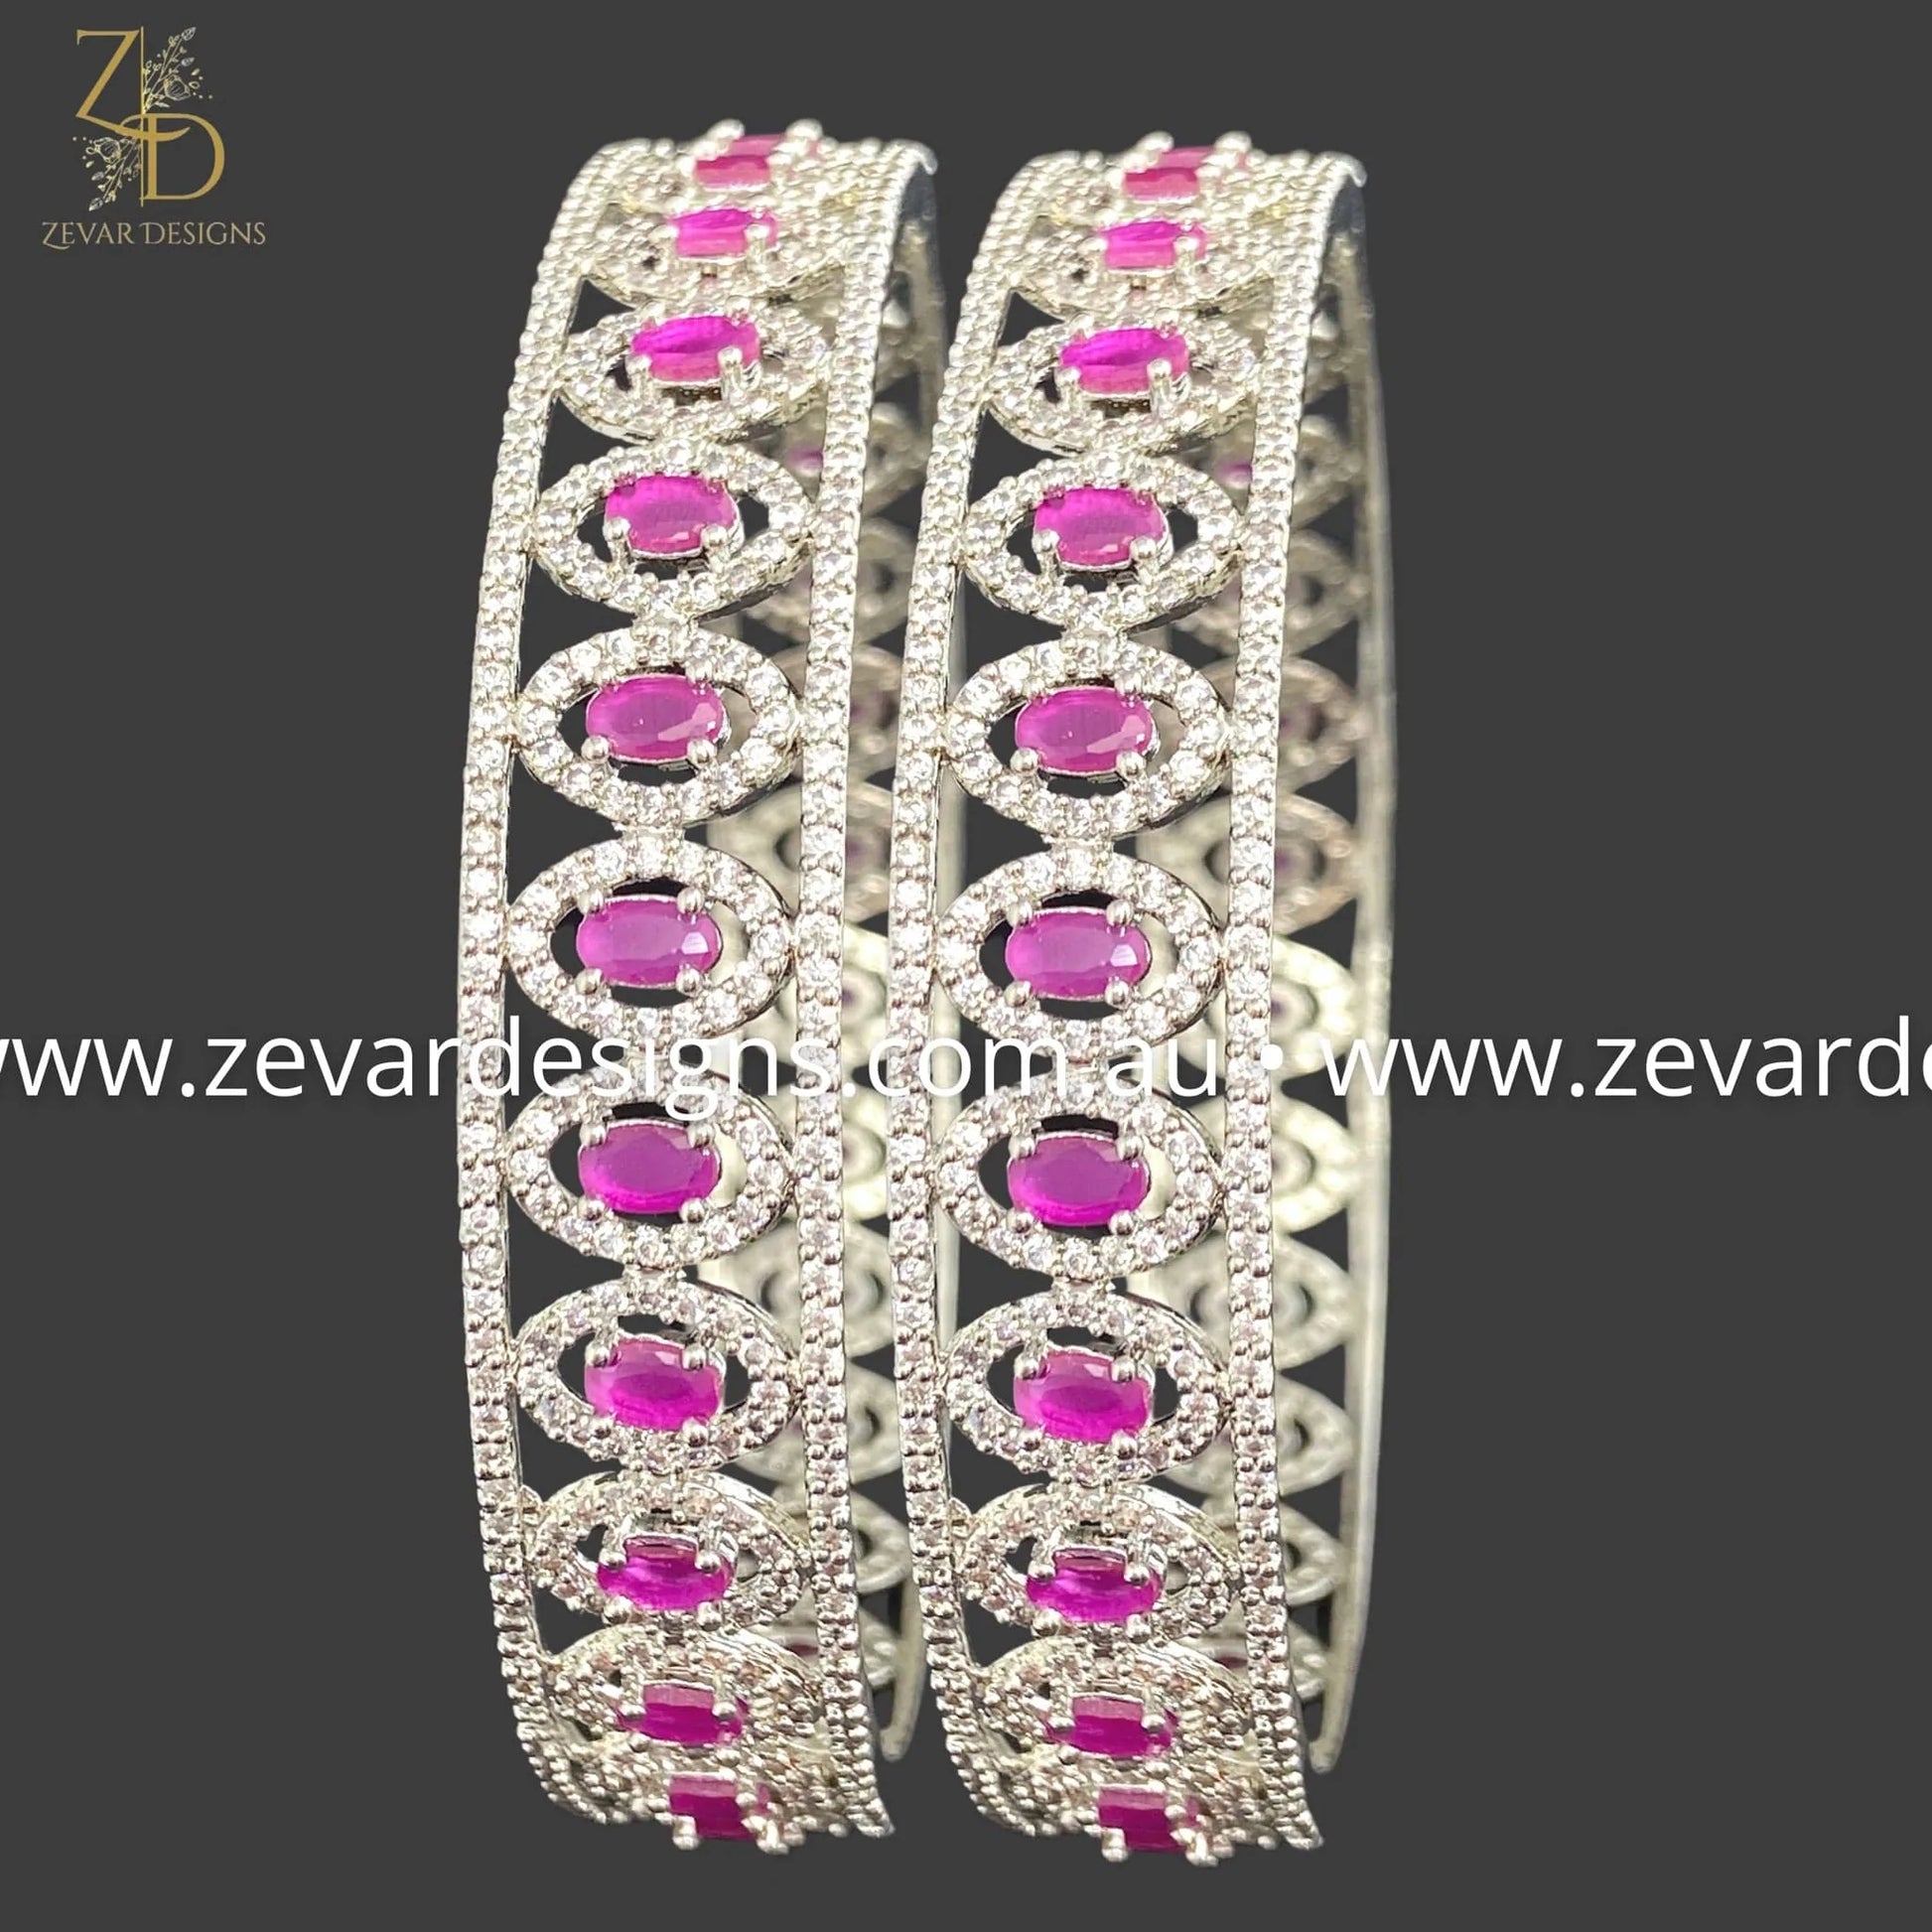 Zevar Designs Bangles & Bracelets - AD AD Bangles - Ruby and White Rhodium